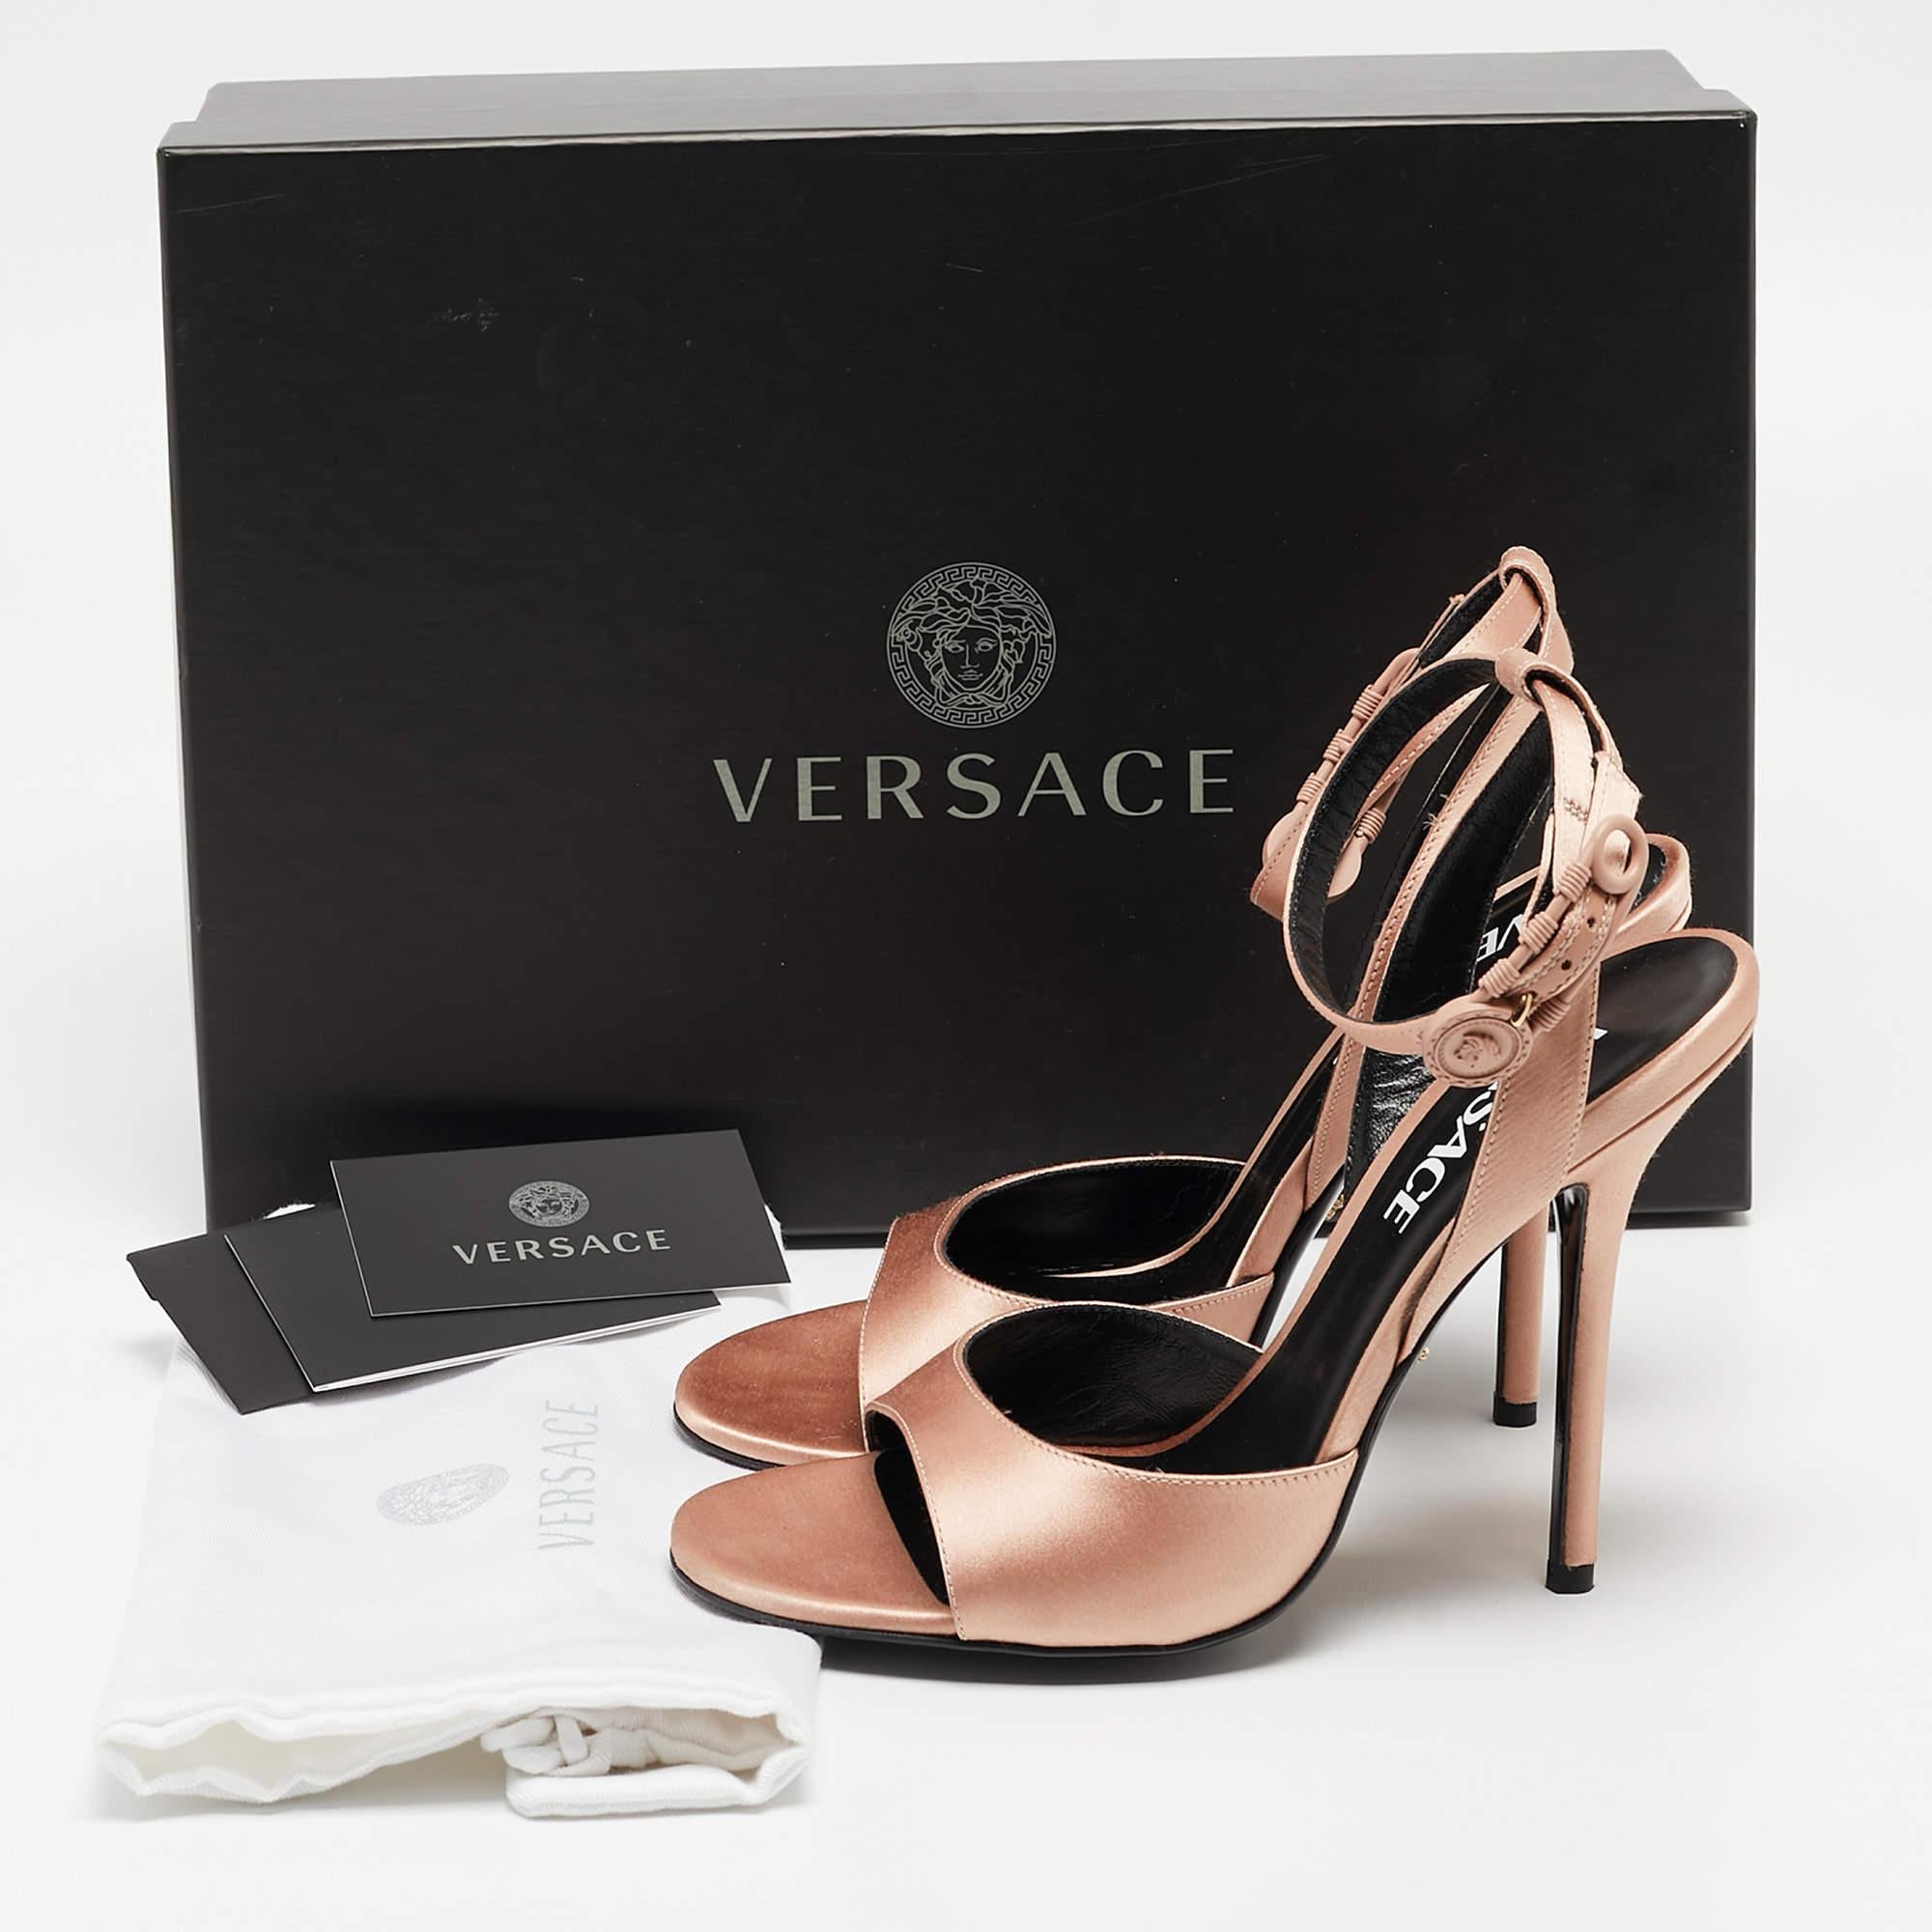 Versace Beige Satin Open Toe Ankle Strap Sandals Size 36 5